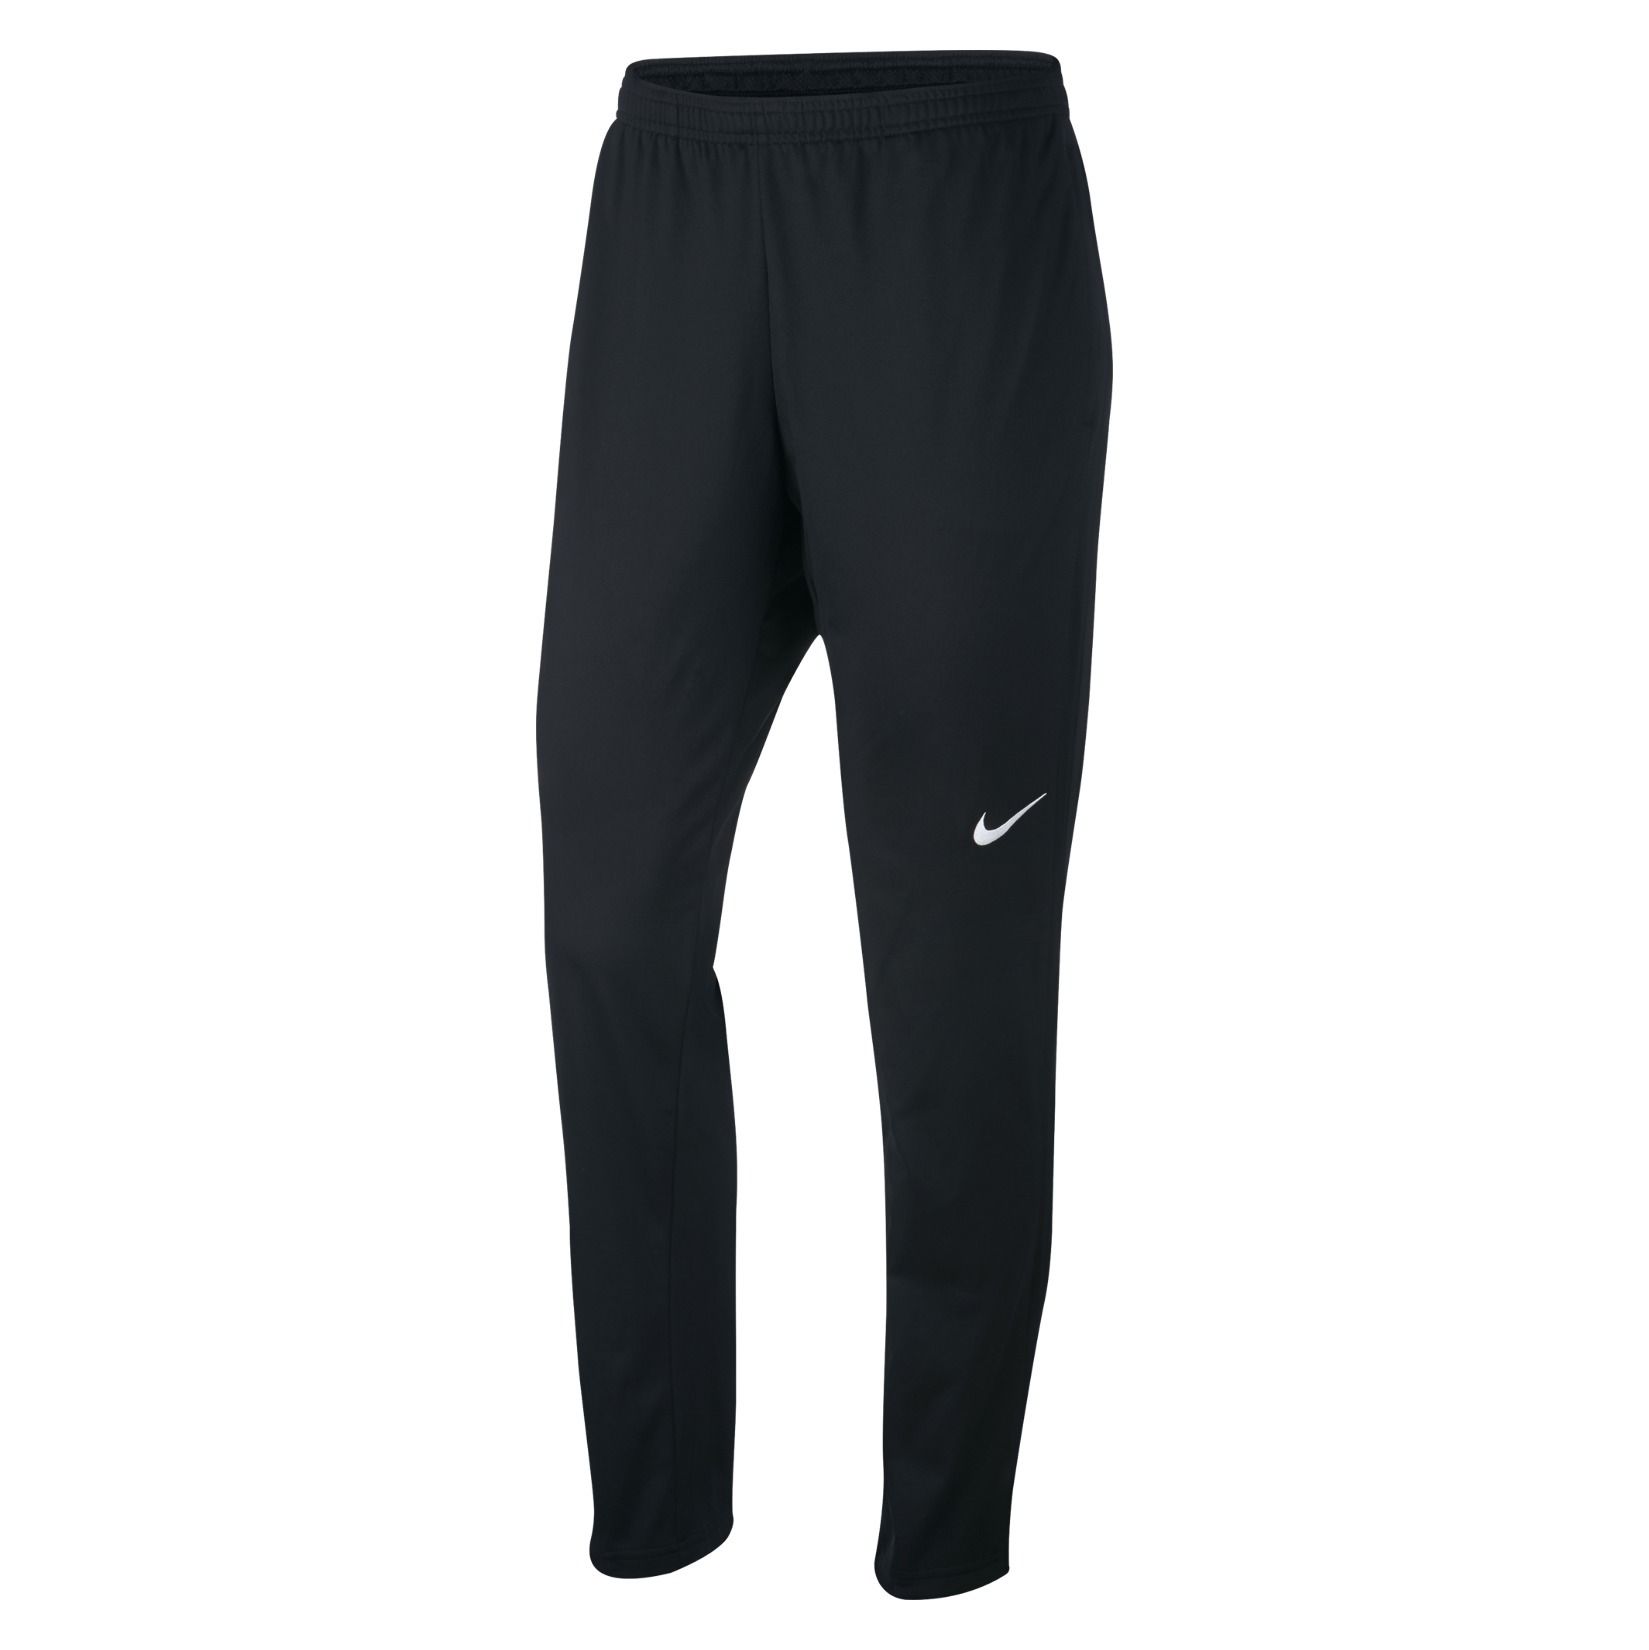 Nike Womens Fit Academy 18 Tech Pants - Kitlocker.com